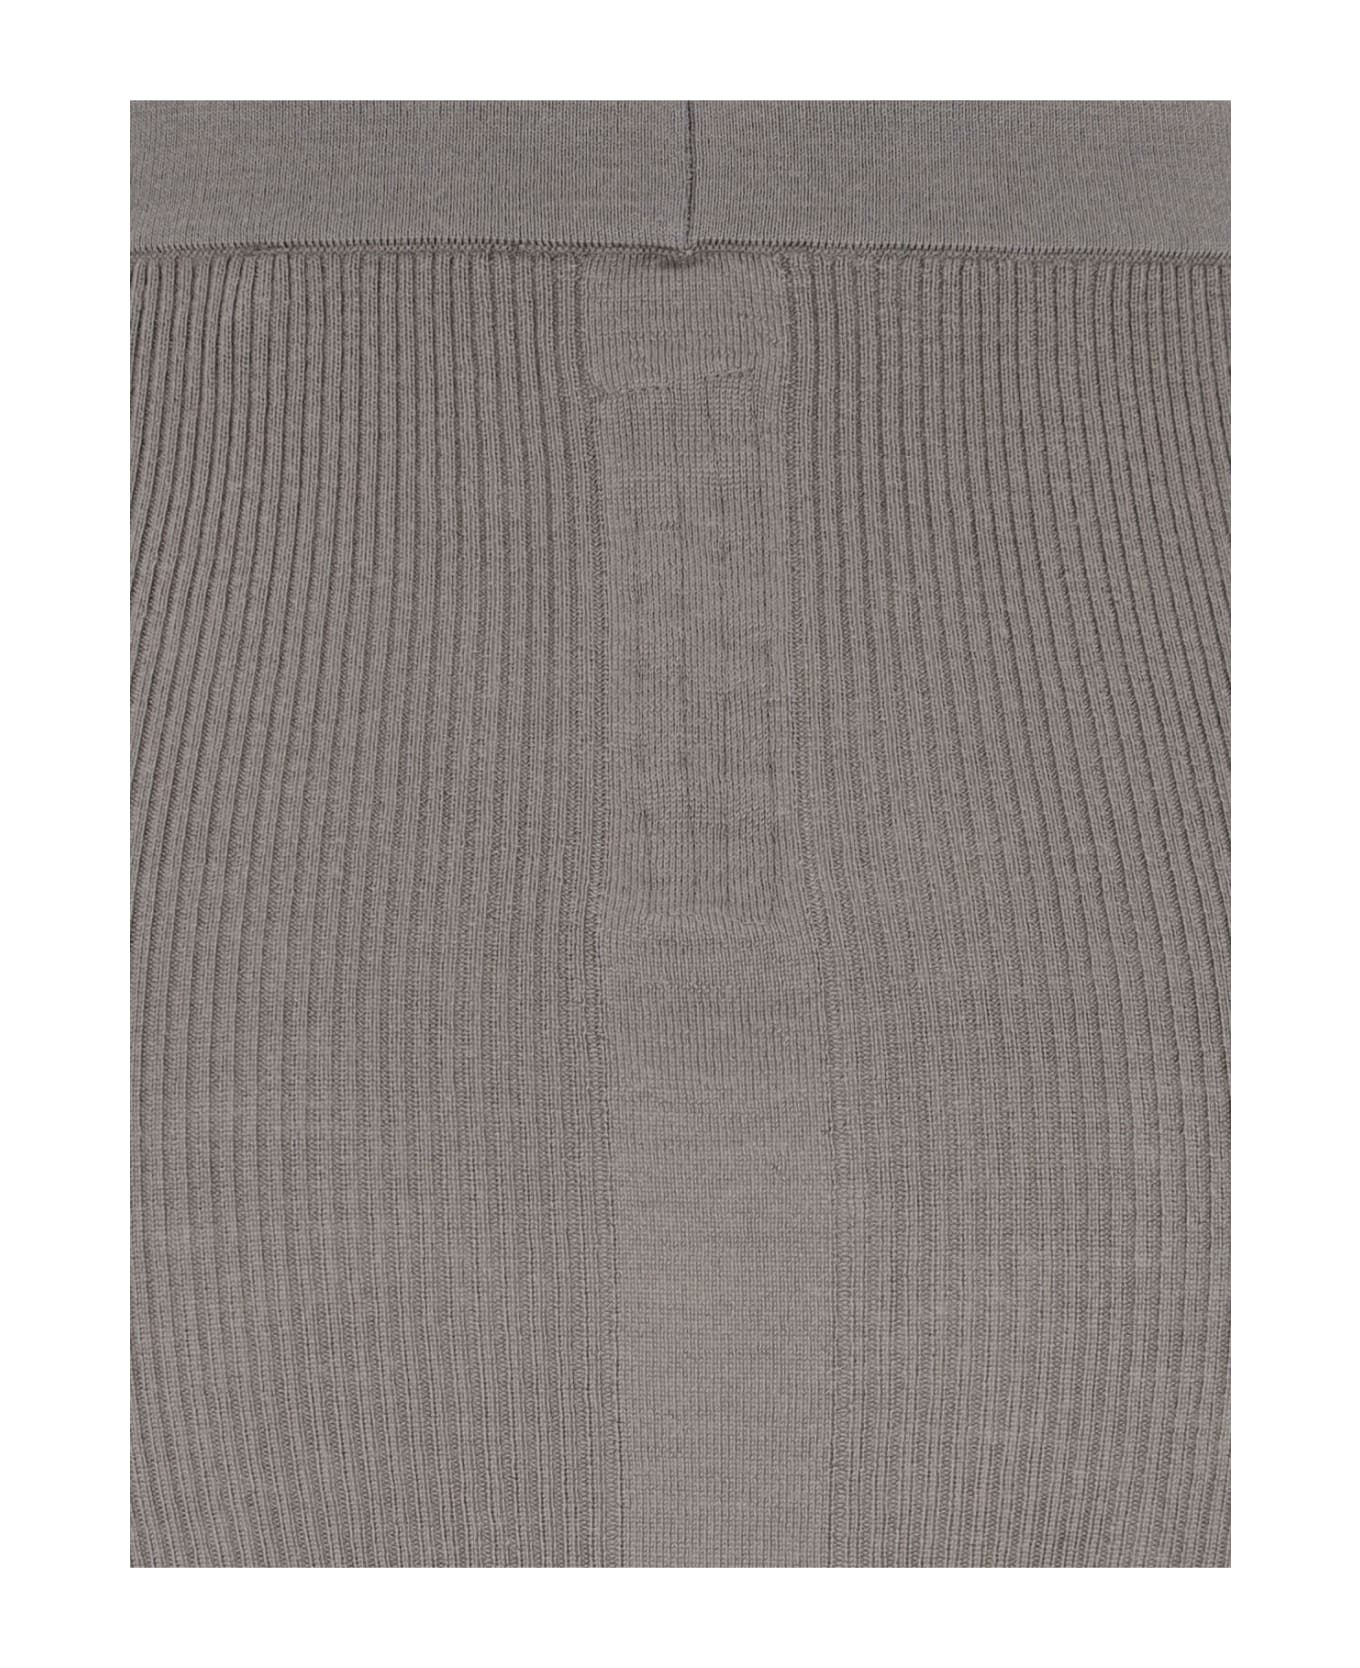 Rick Owens Skirt - Grey スカート